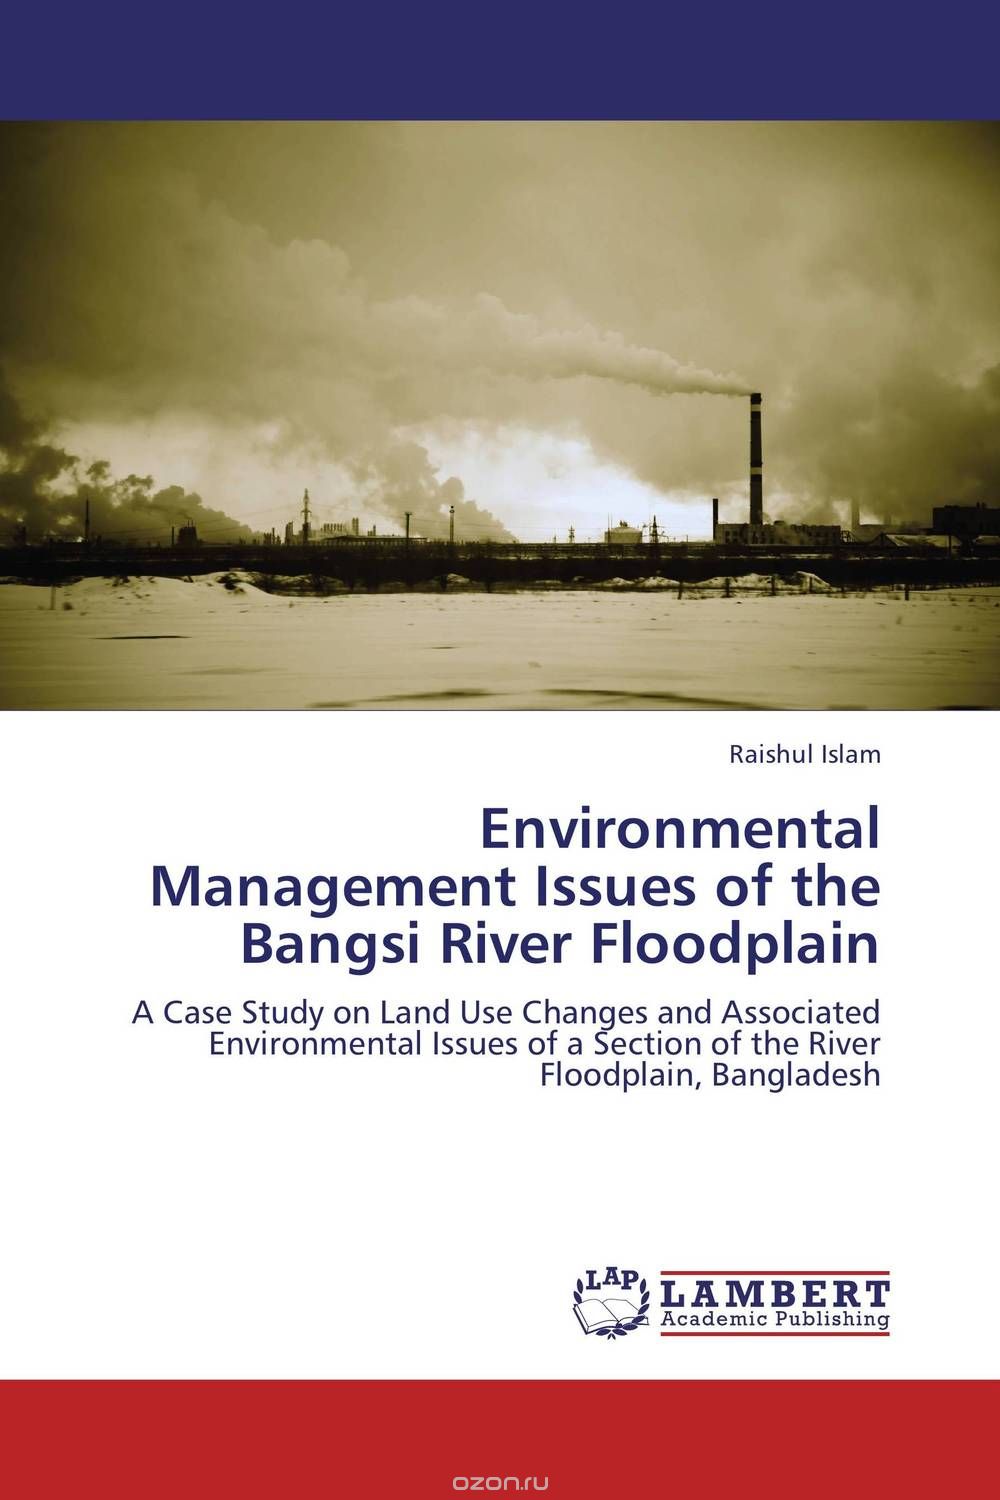 Скачать книгу "Environmental Management Issues of the Bangsi River Floodplain"